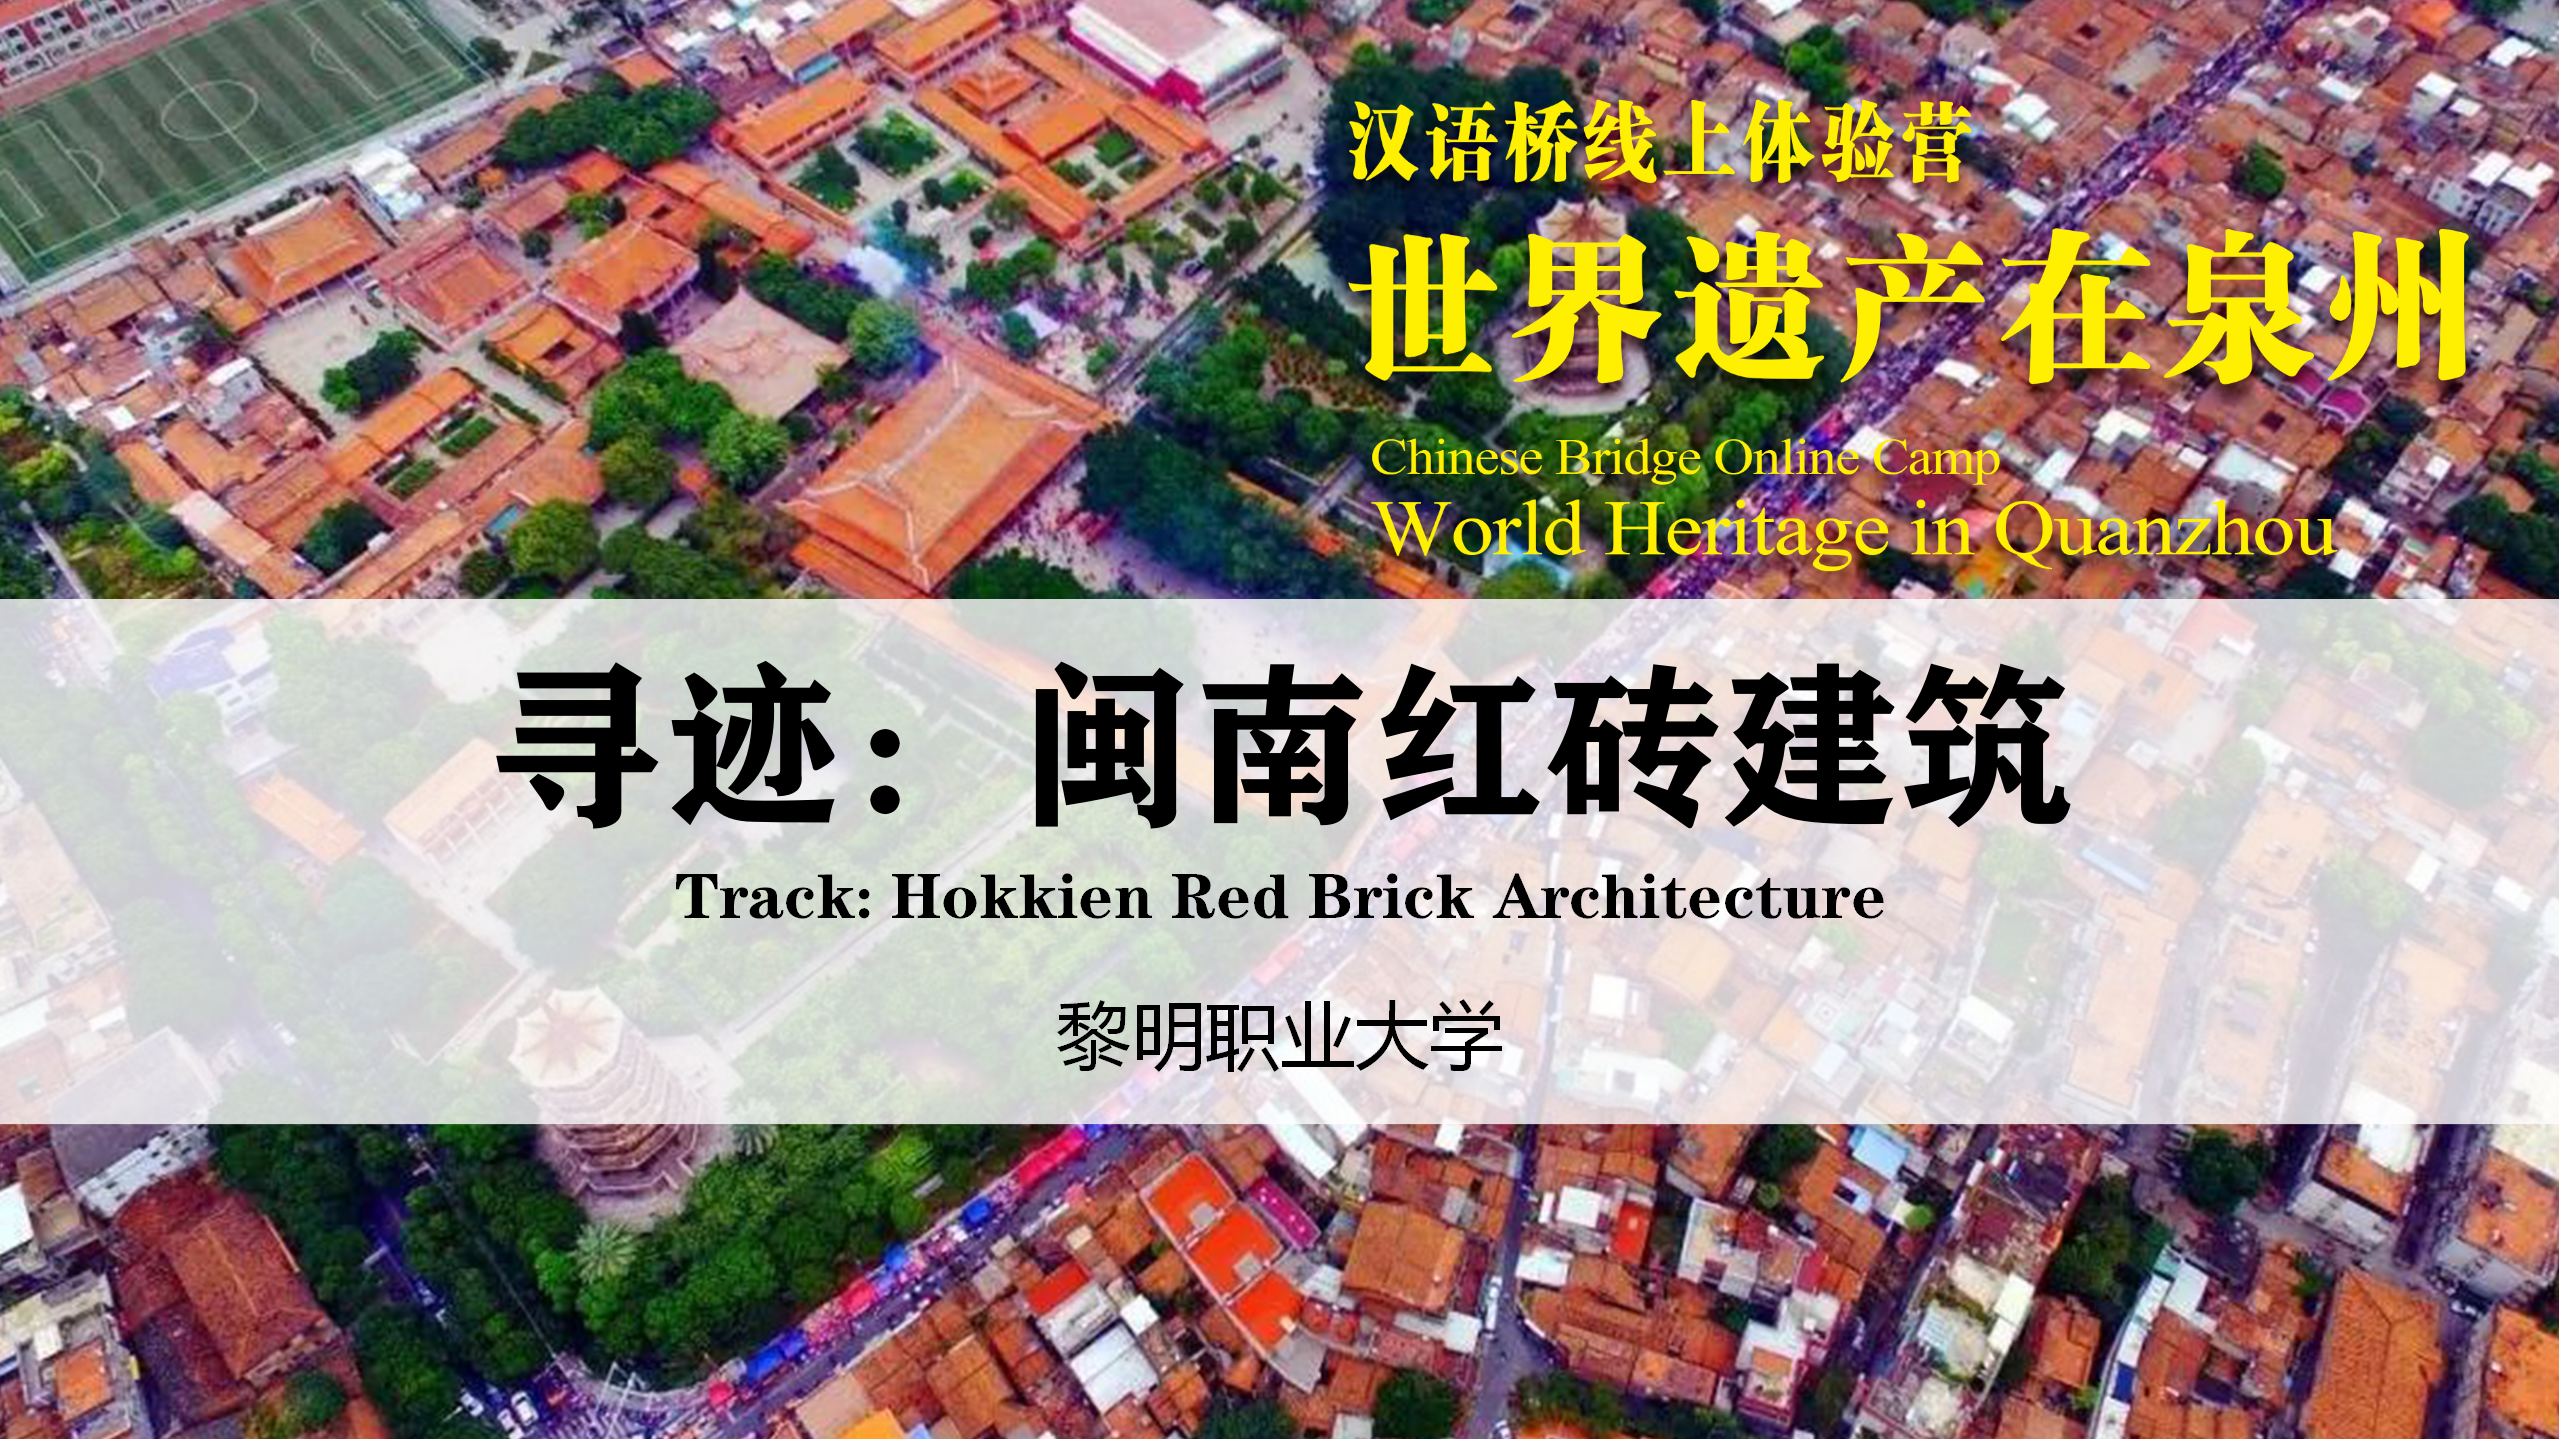 Track： Hokkien Red Brick Architecture